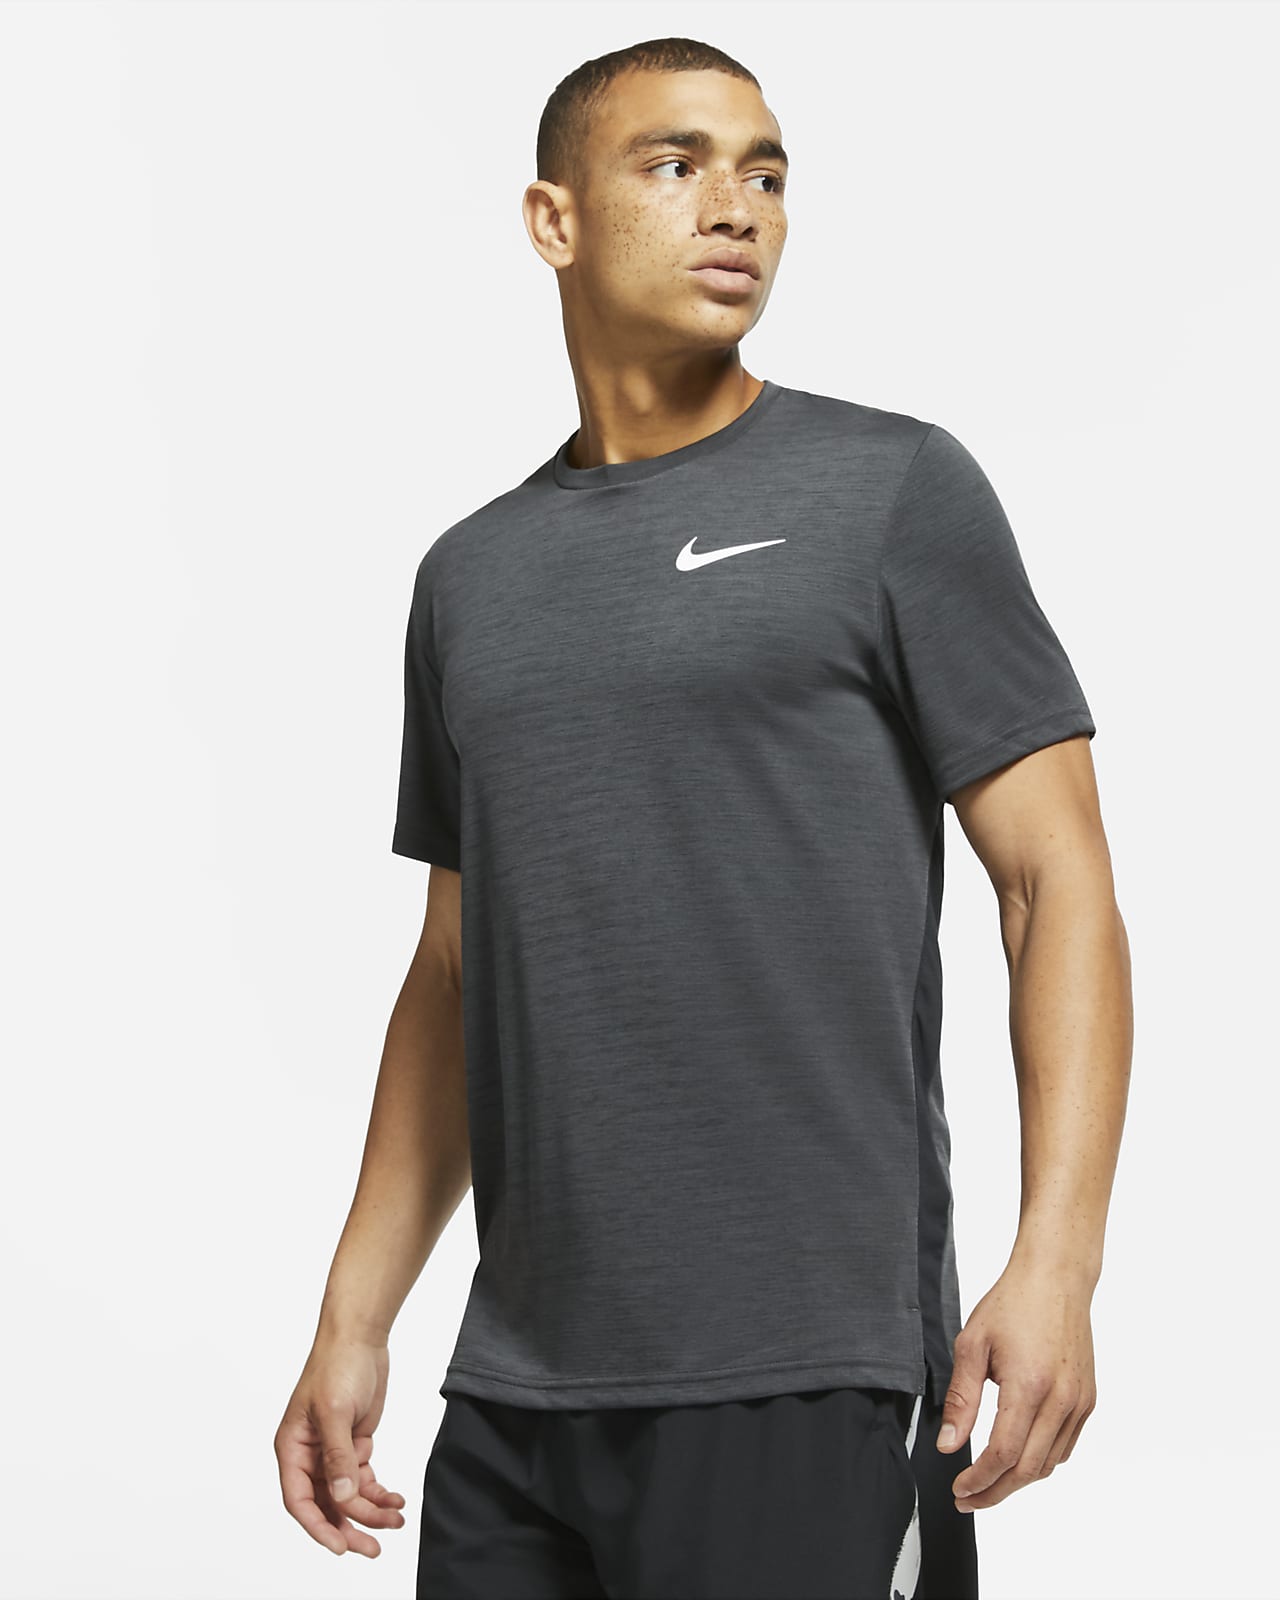 Nike Men's Short-Sleeve Top